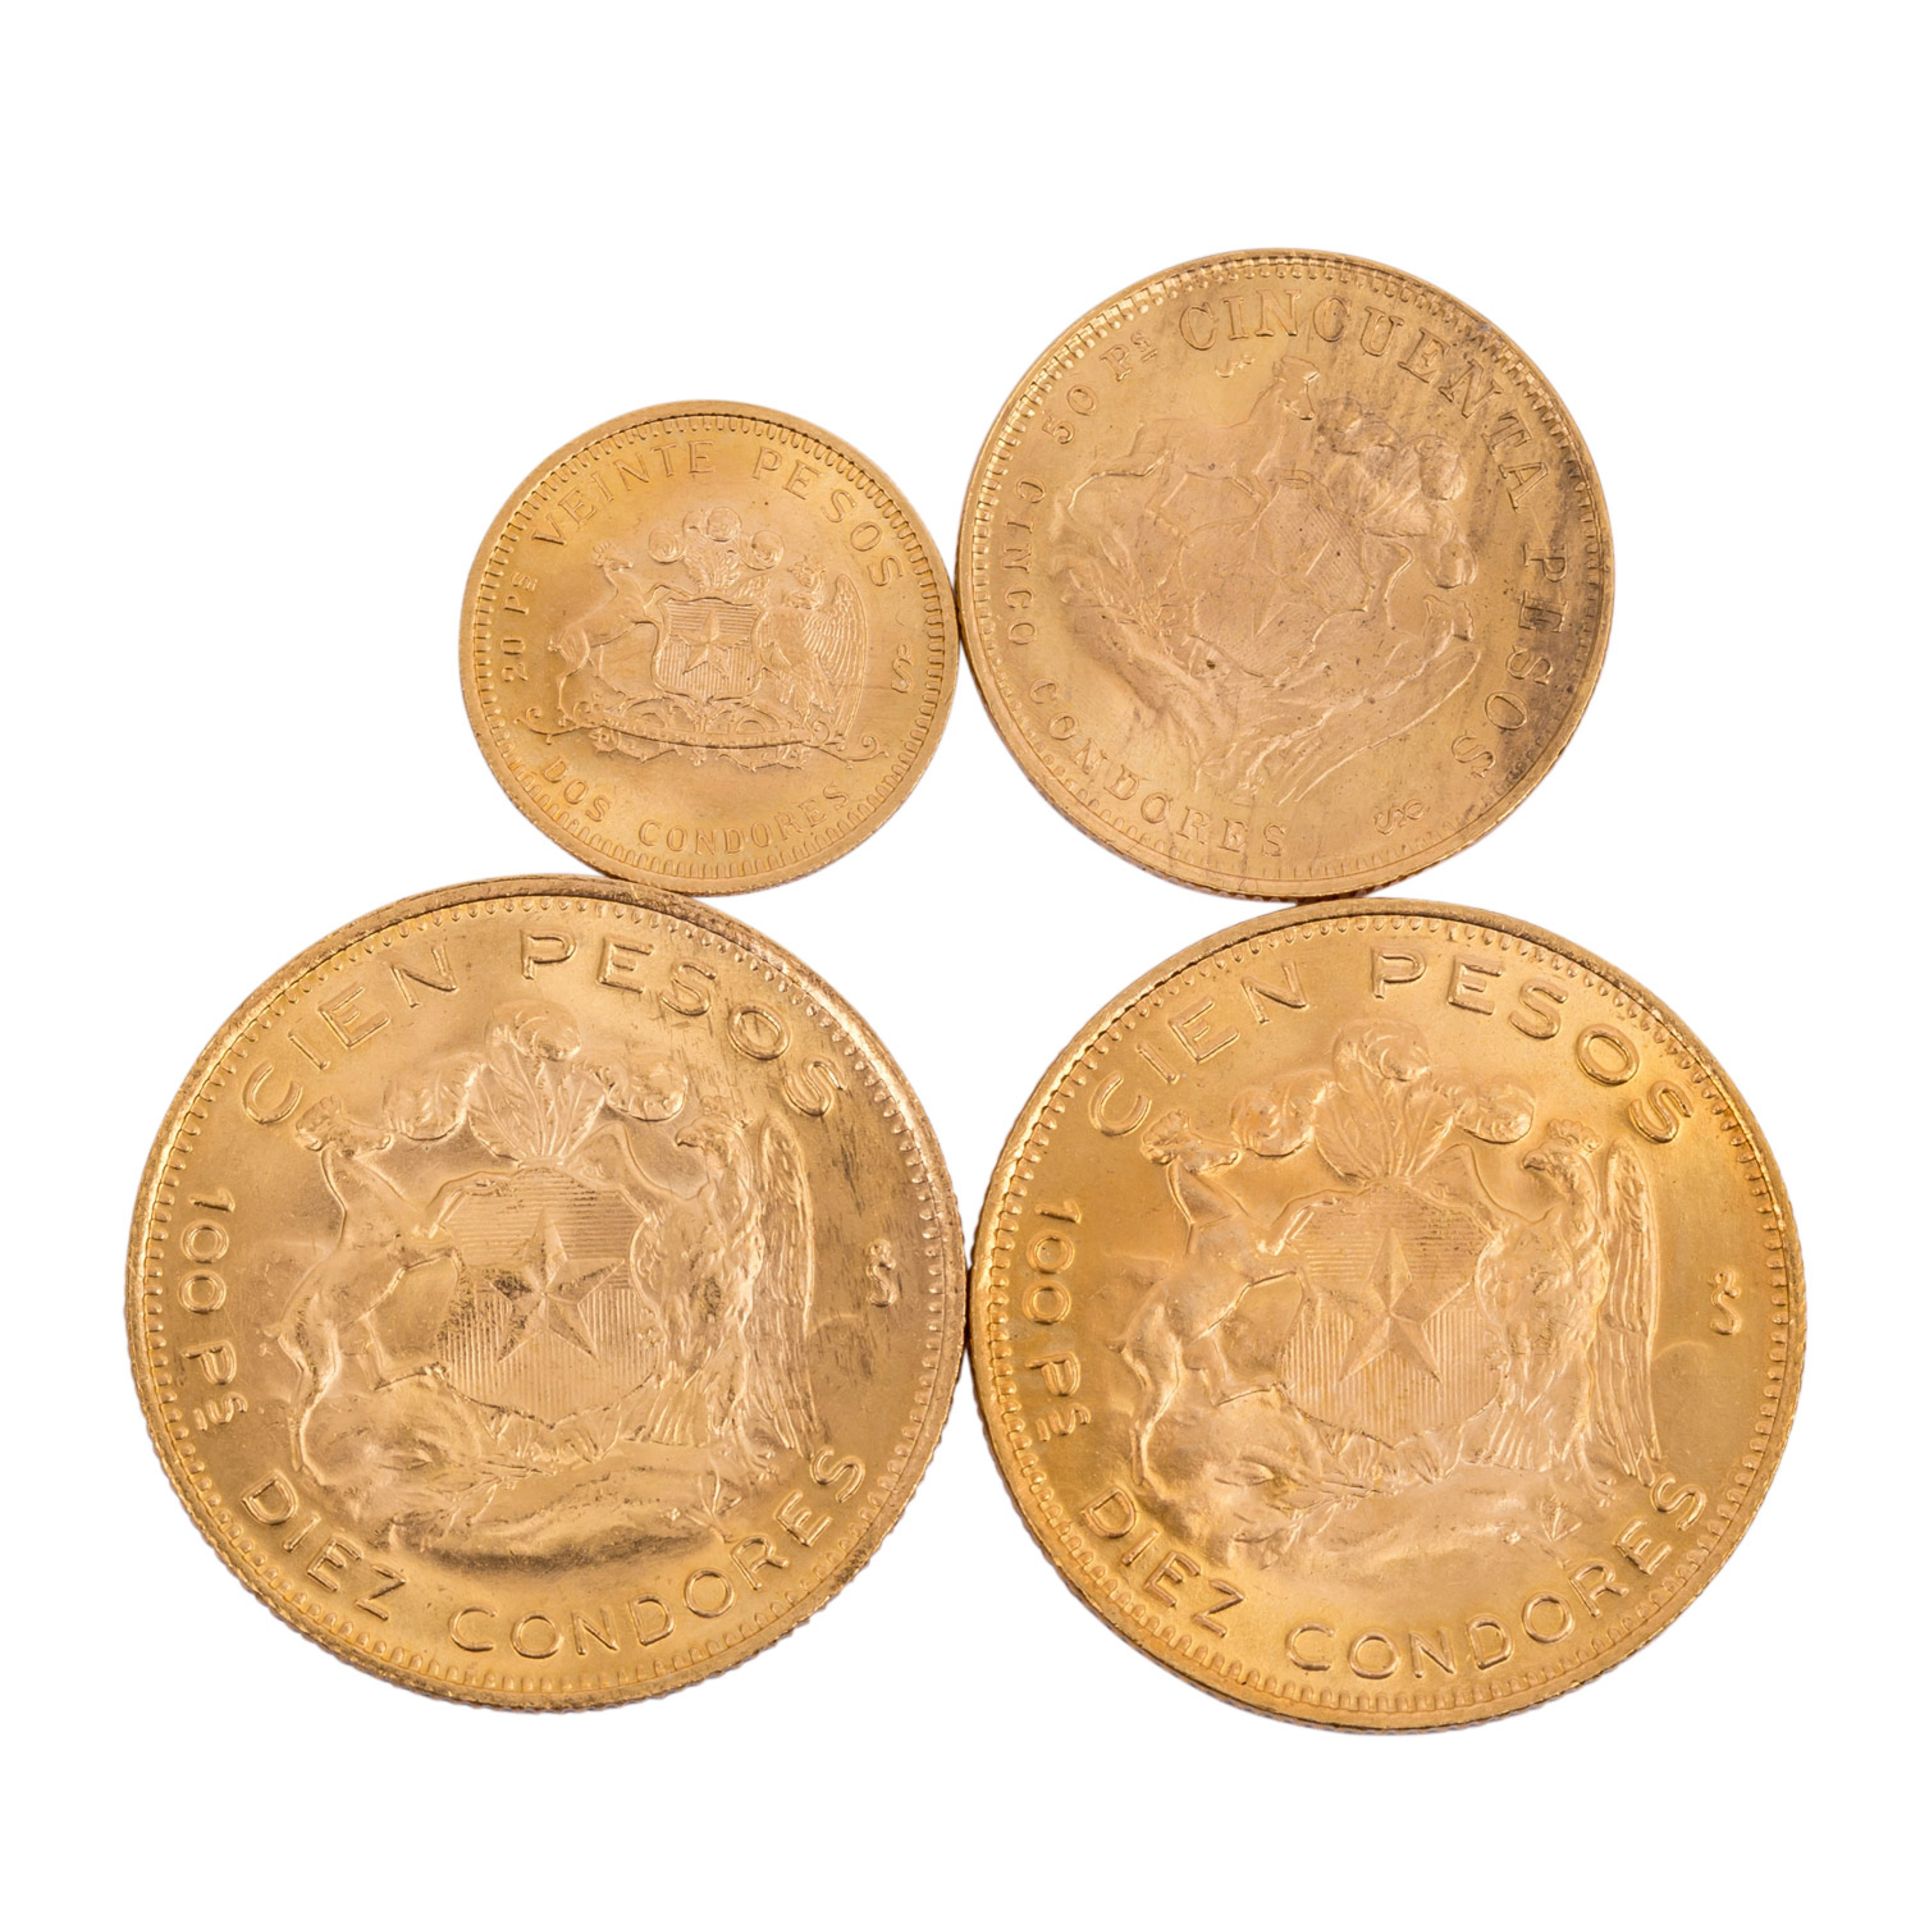 Chile/GOLD - Lot mit 2 x 100 Pesos 1973/74,50 Pesos 1970 sowie 20 Pesos 1976. Ca. 49 g fein, - Bild 2 aus 2